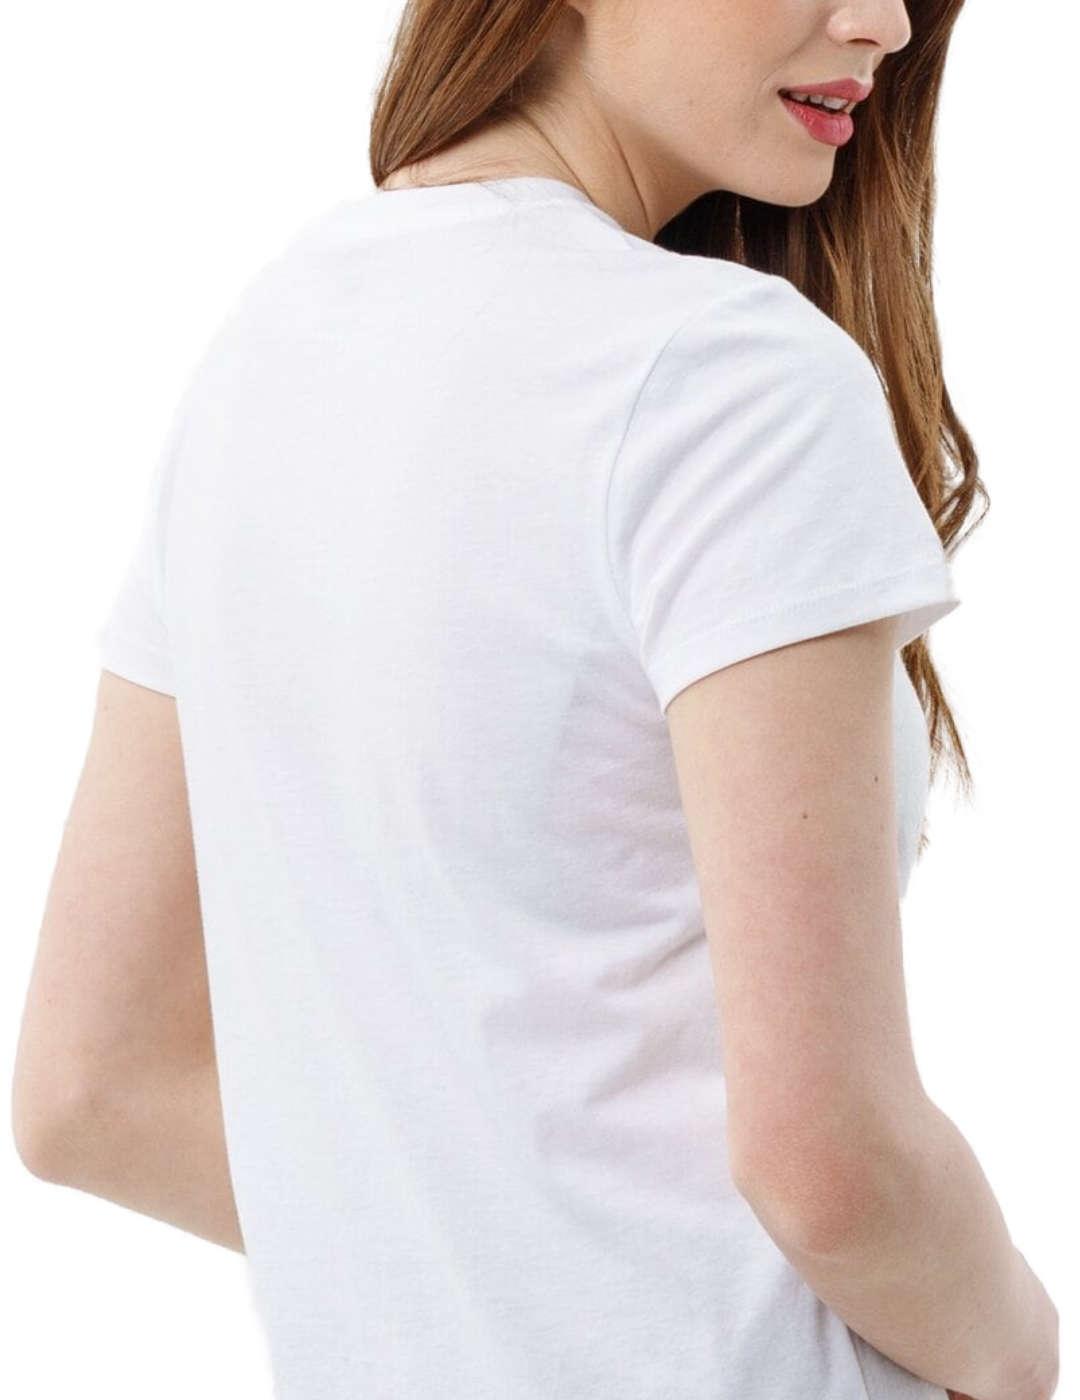 Camiseta levis logo 84r blanca manga corta mujer-